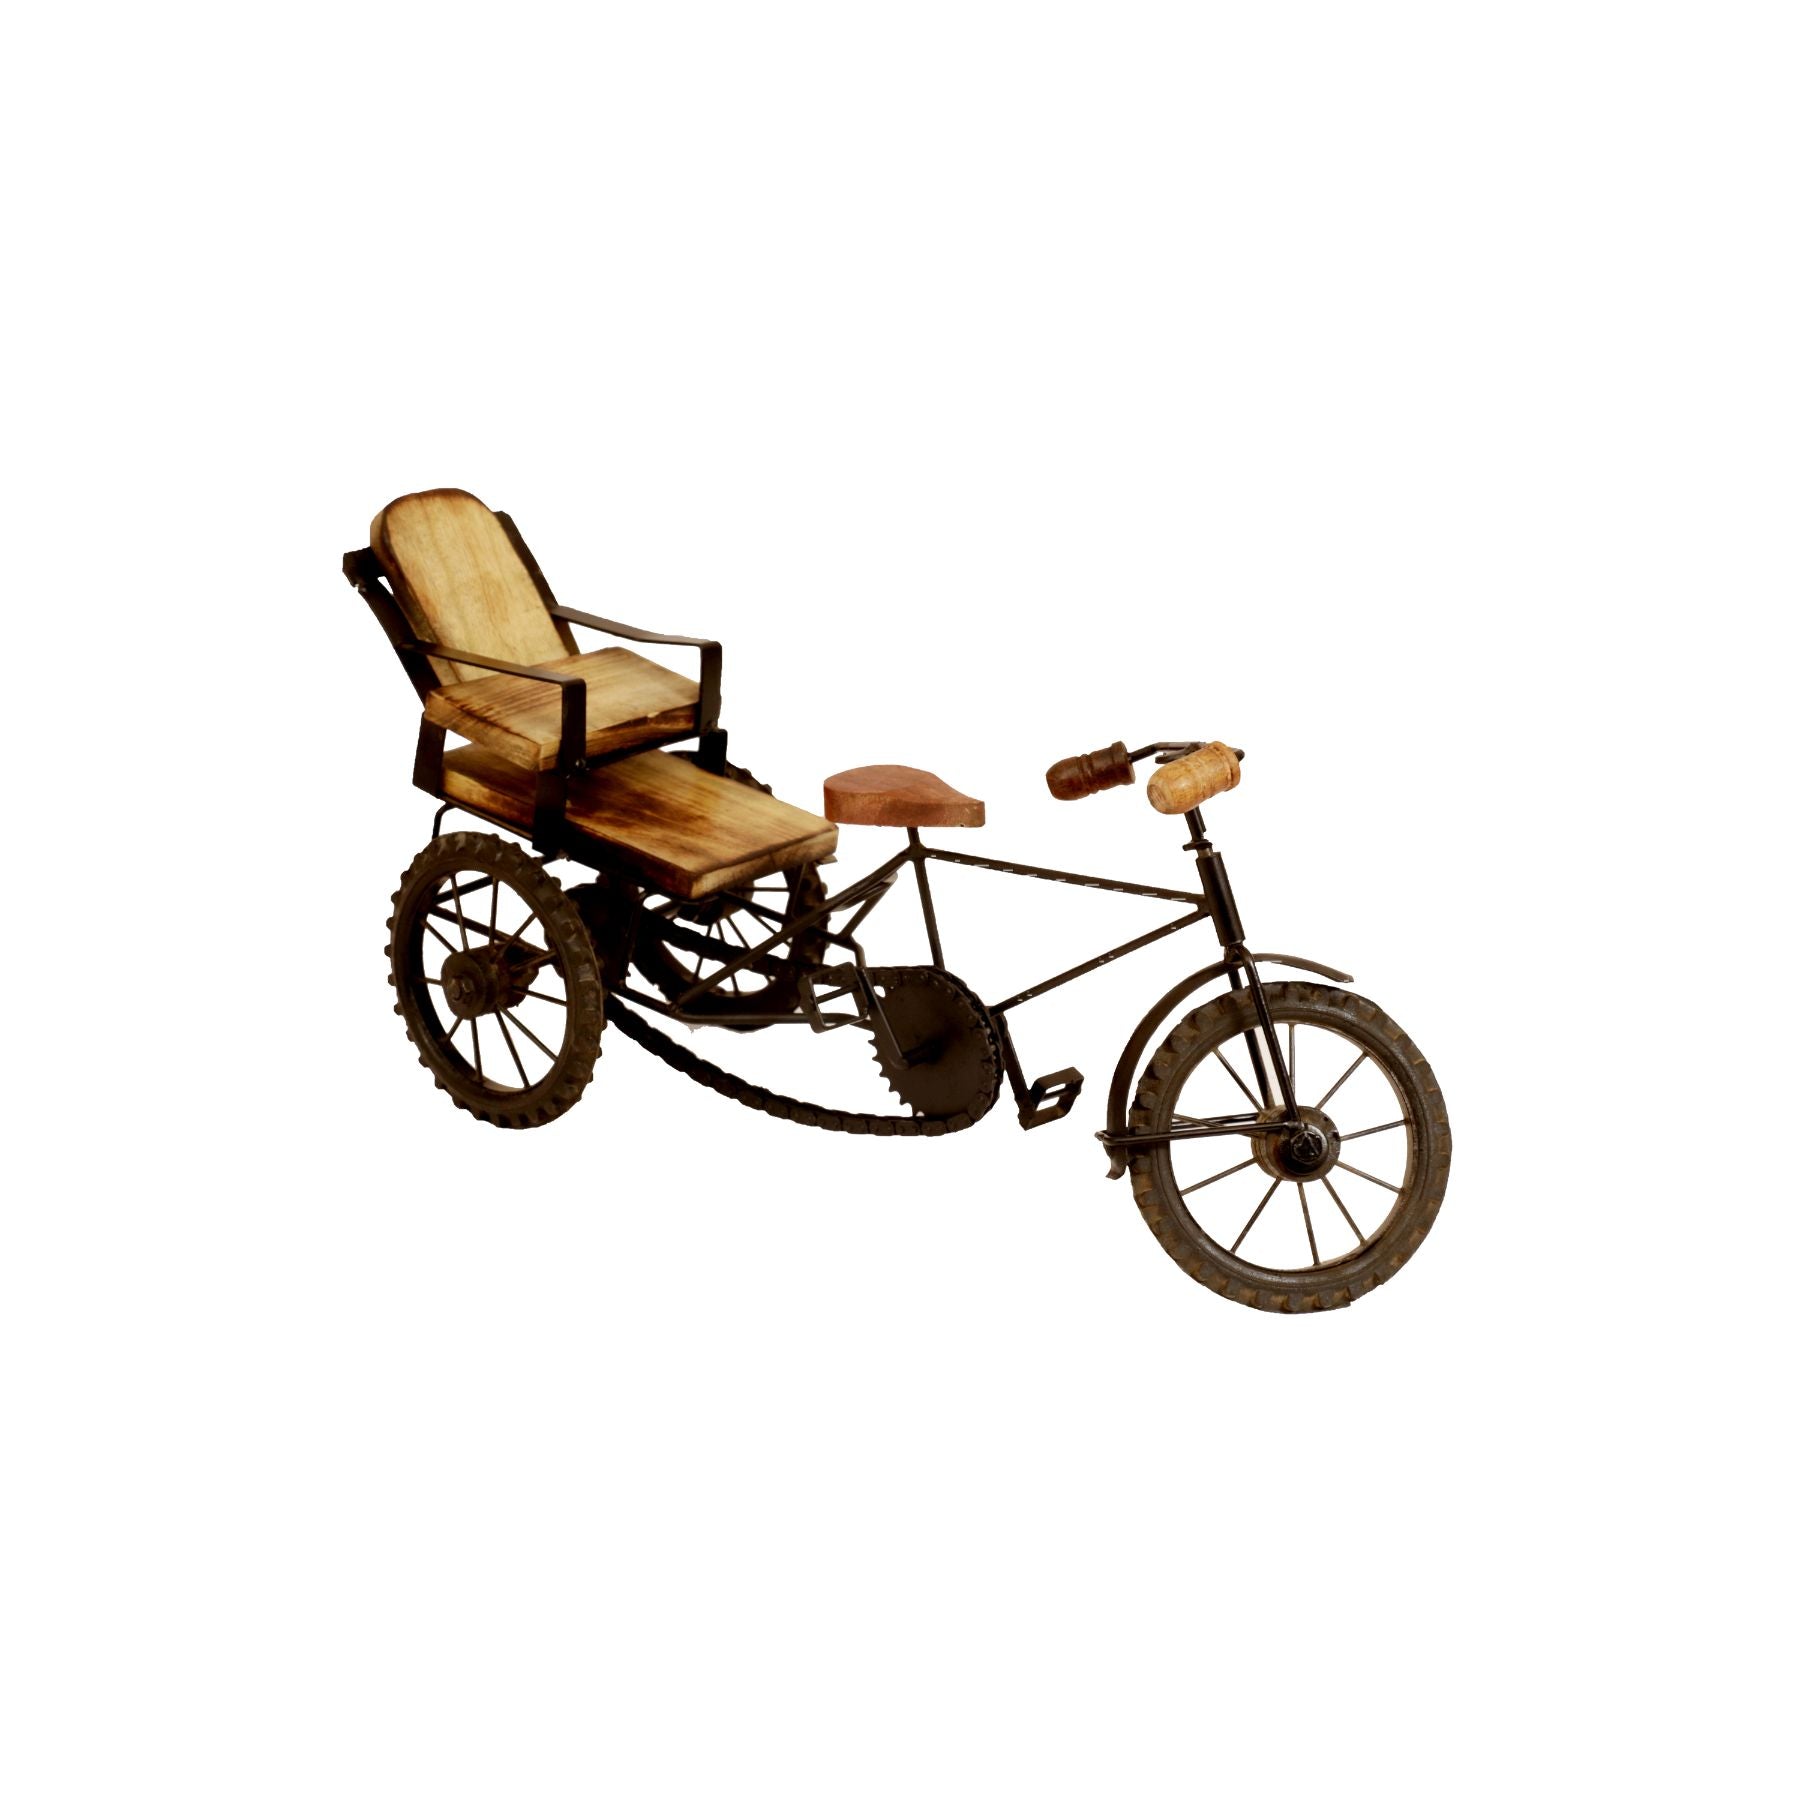 Vintage India Cycle Rickshaw Vehicle figurine